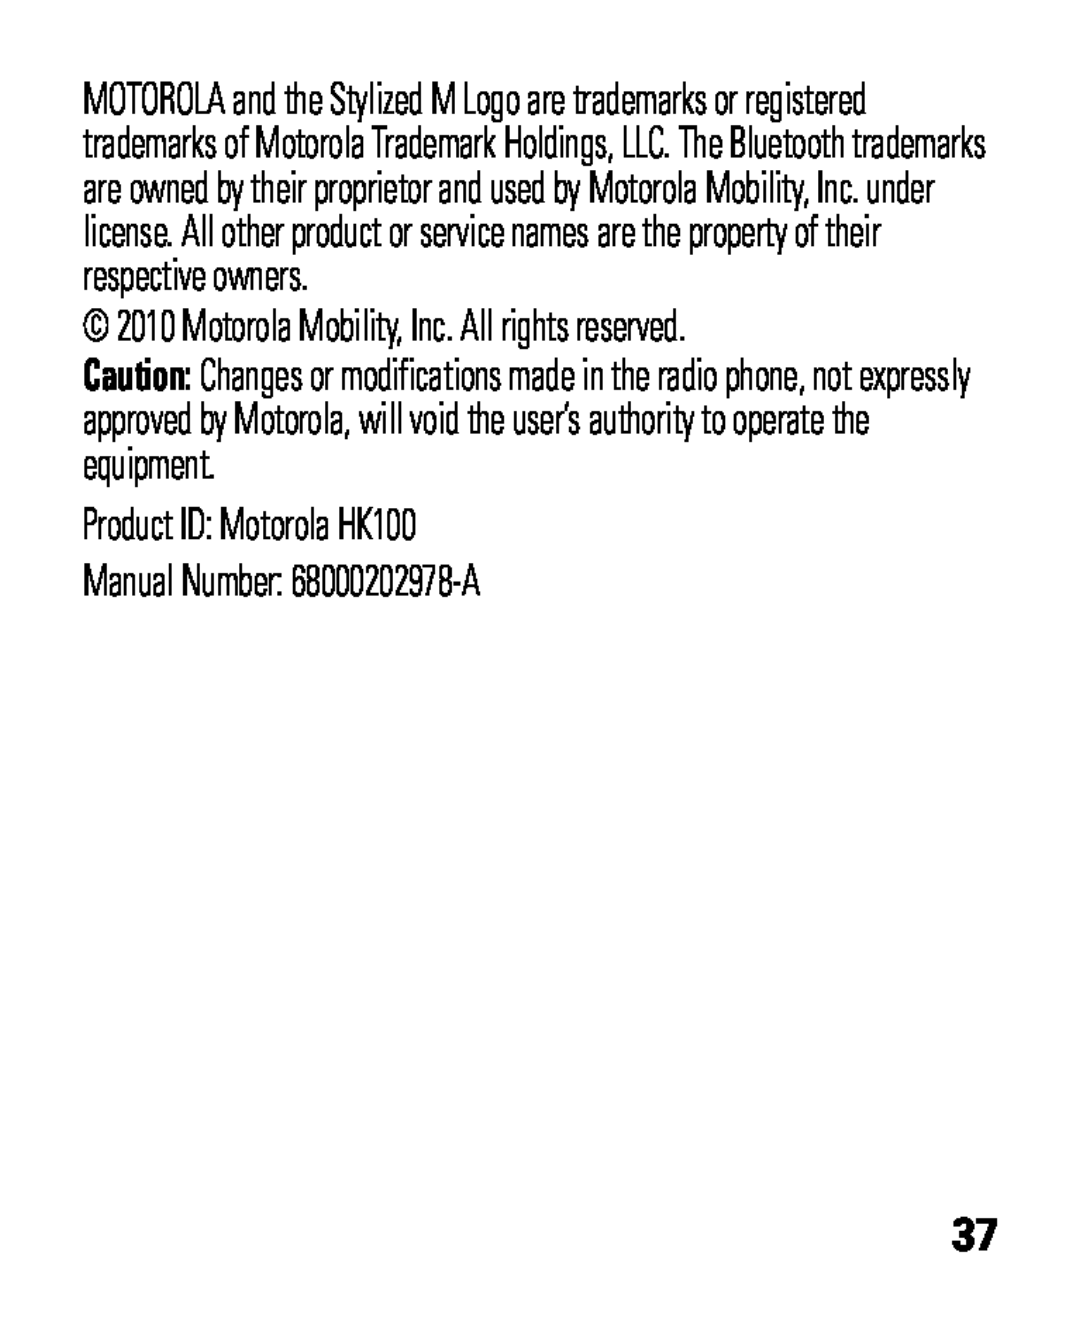 Motorola Product ID: Motorola HK100, Manual Number: 68000202978-A, Motorola Mobility, Inc. All rights reserved 